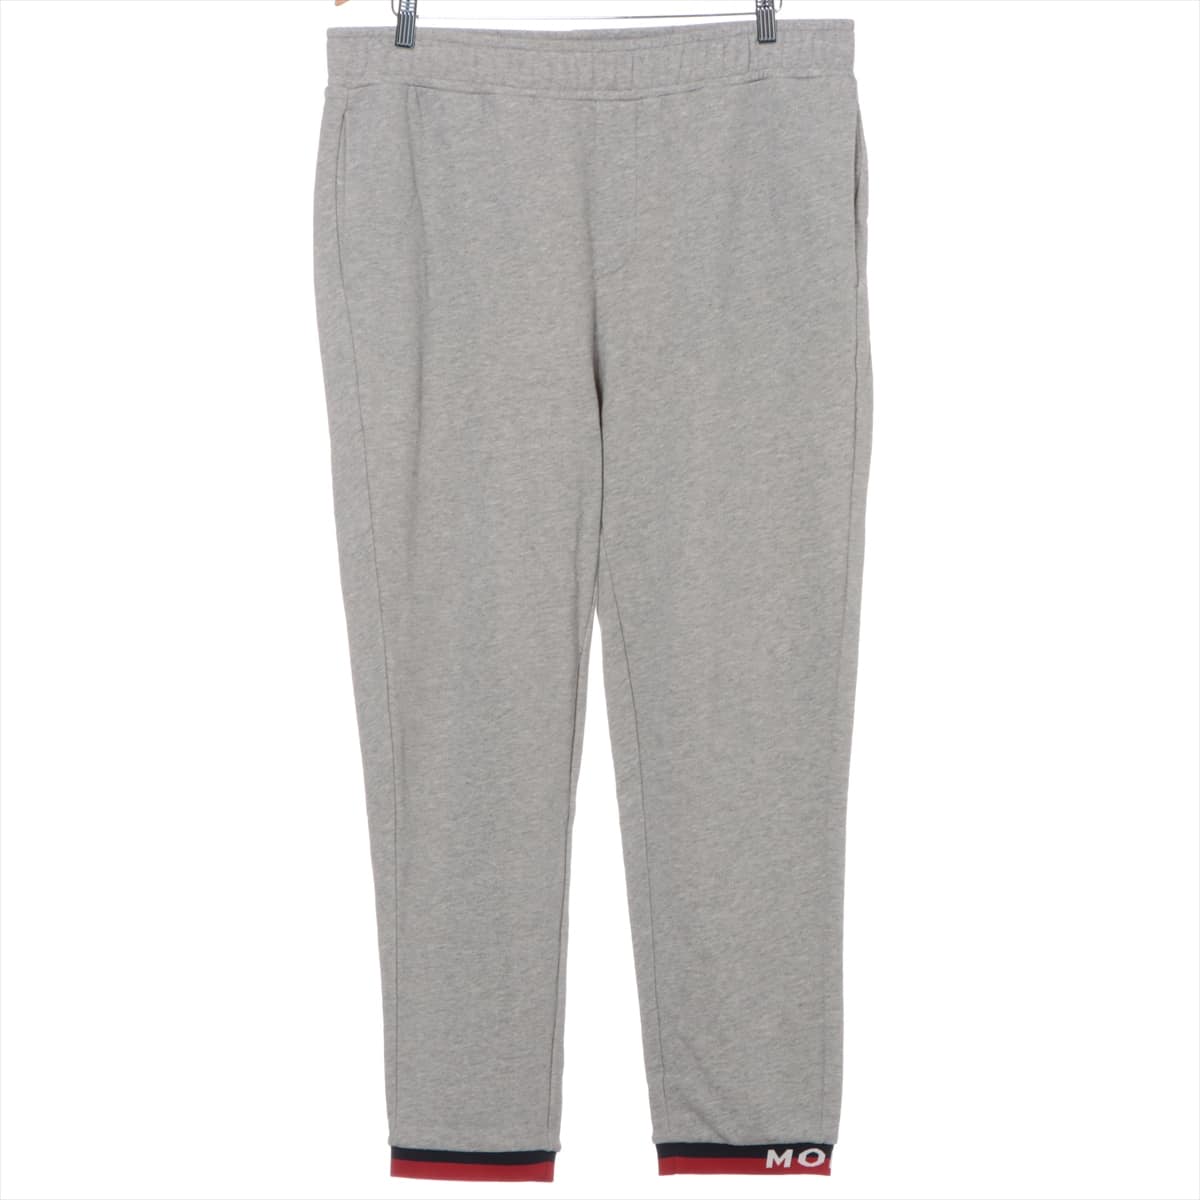 Moncler 18 years Cotton Sweatpants XL Men's Grey